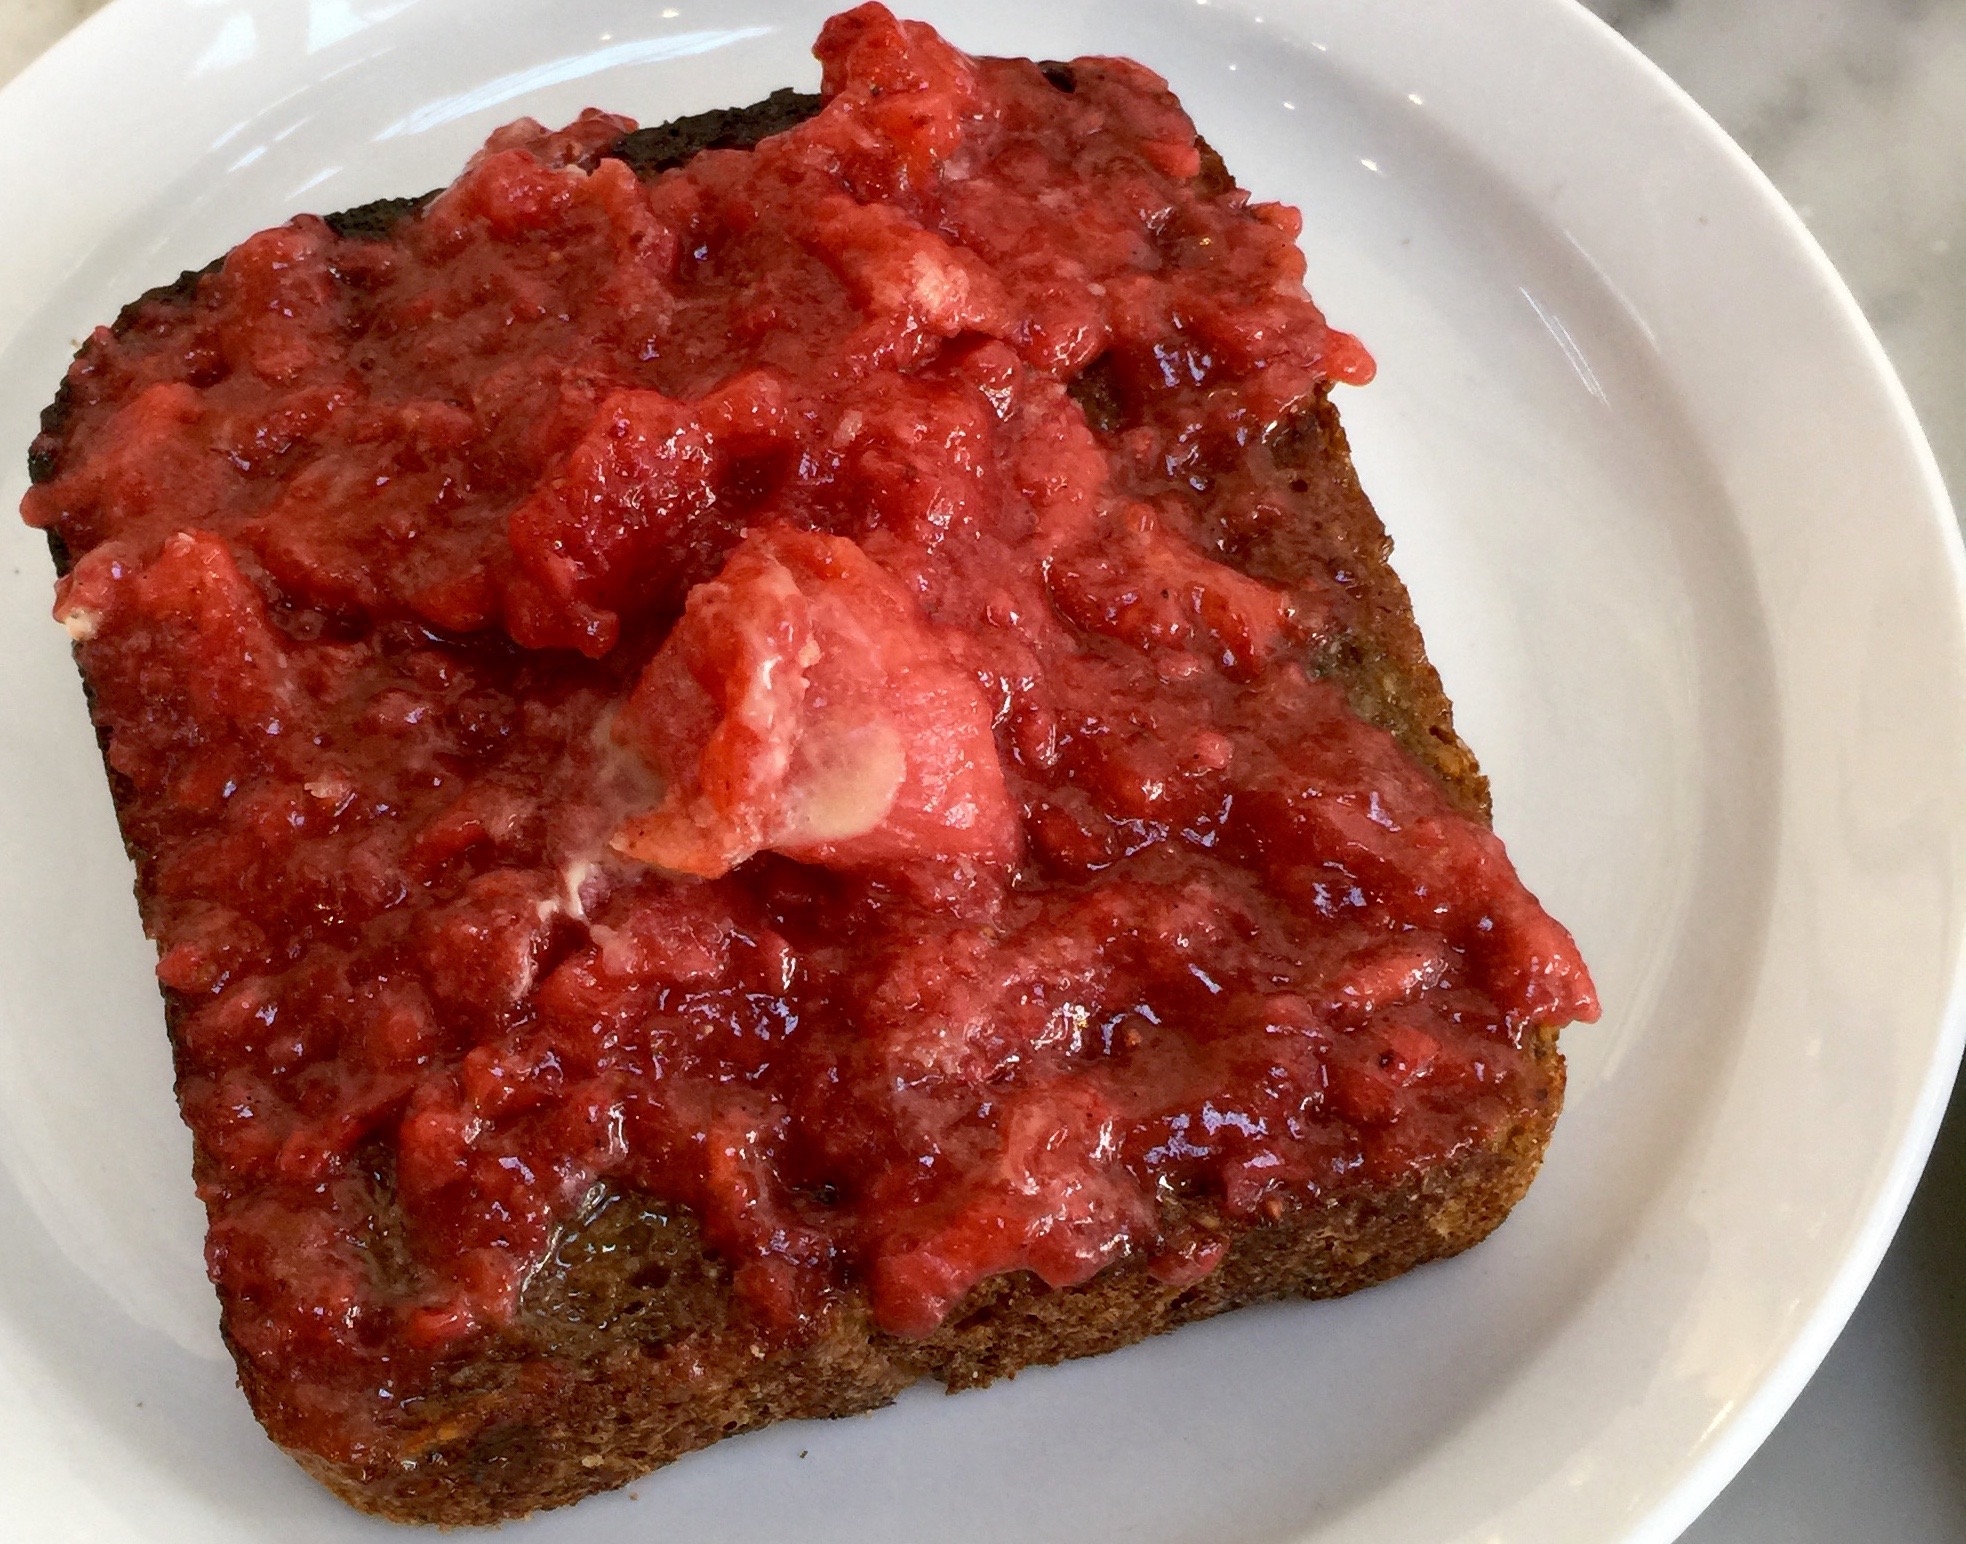 Toast with Strawberry Jam